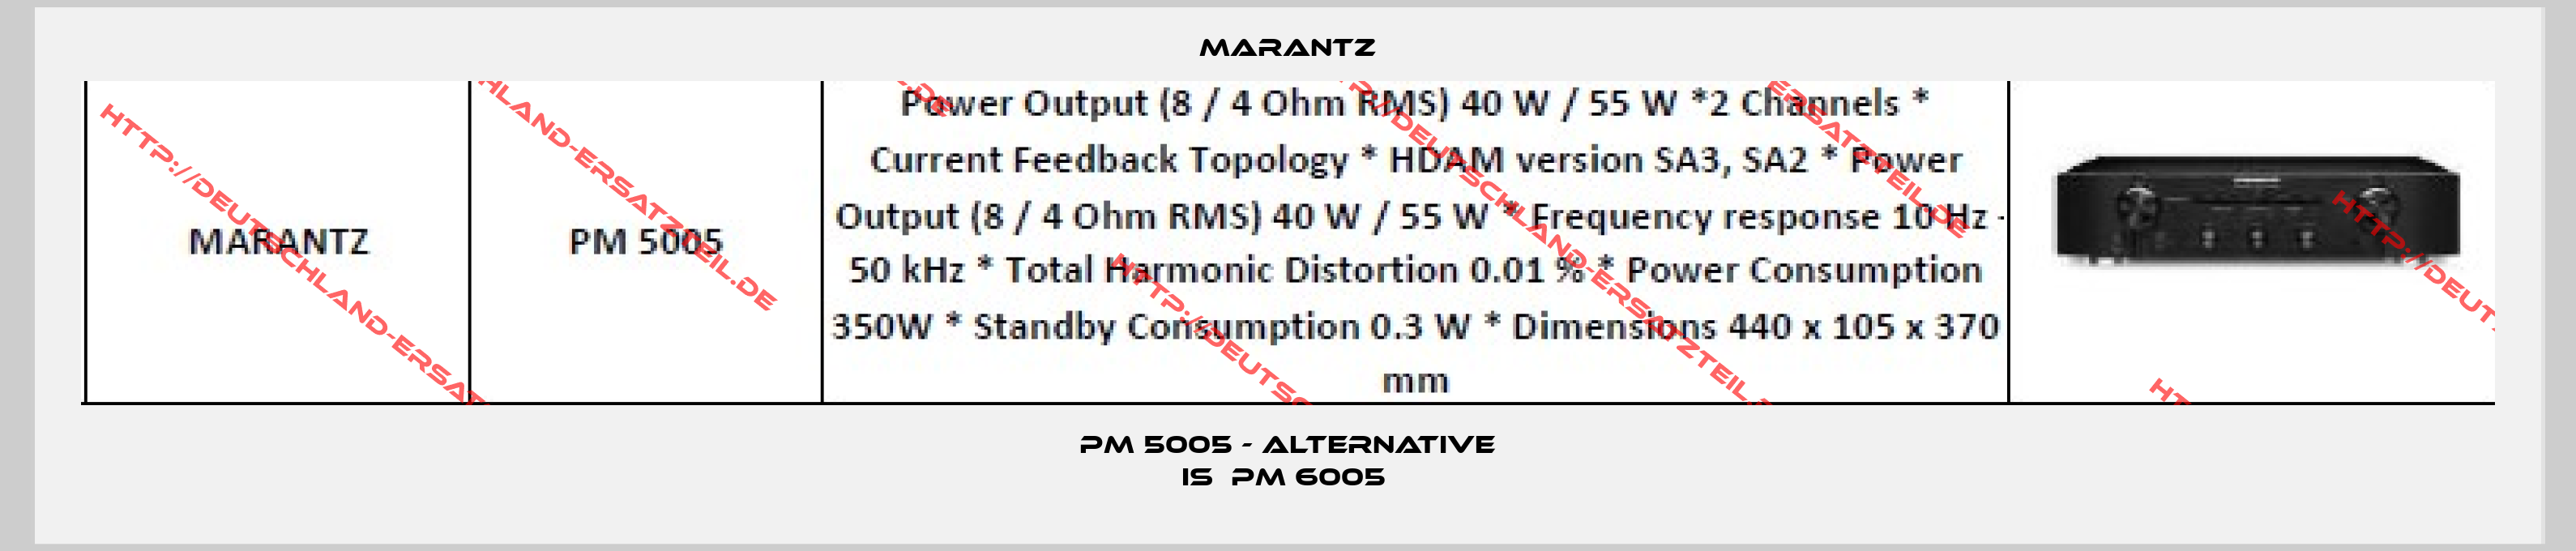 MARANTZ-PM 5005 - alternative is  PM 6005 